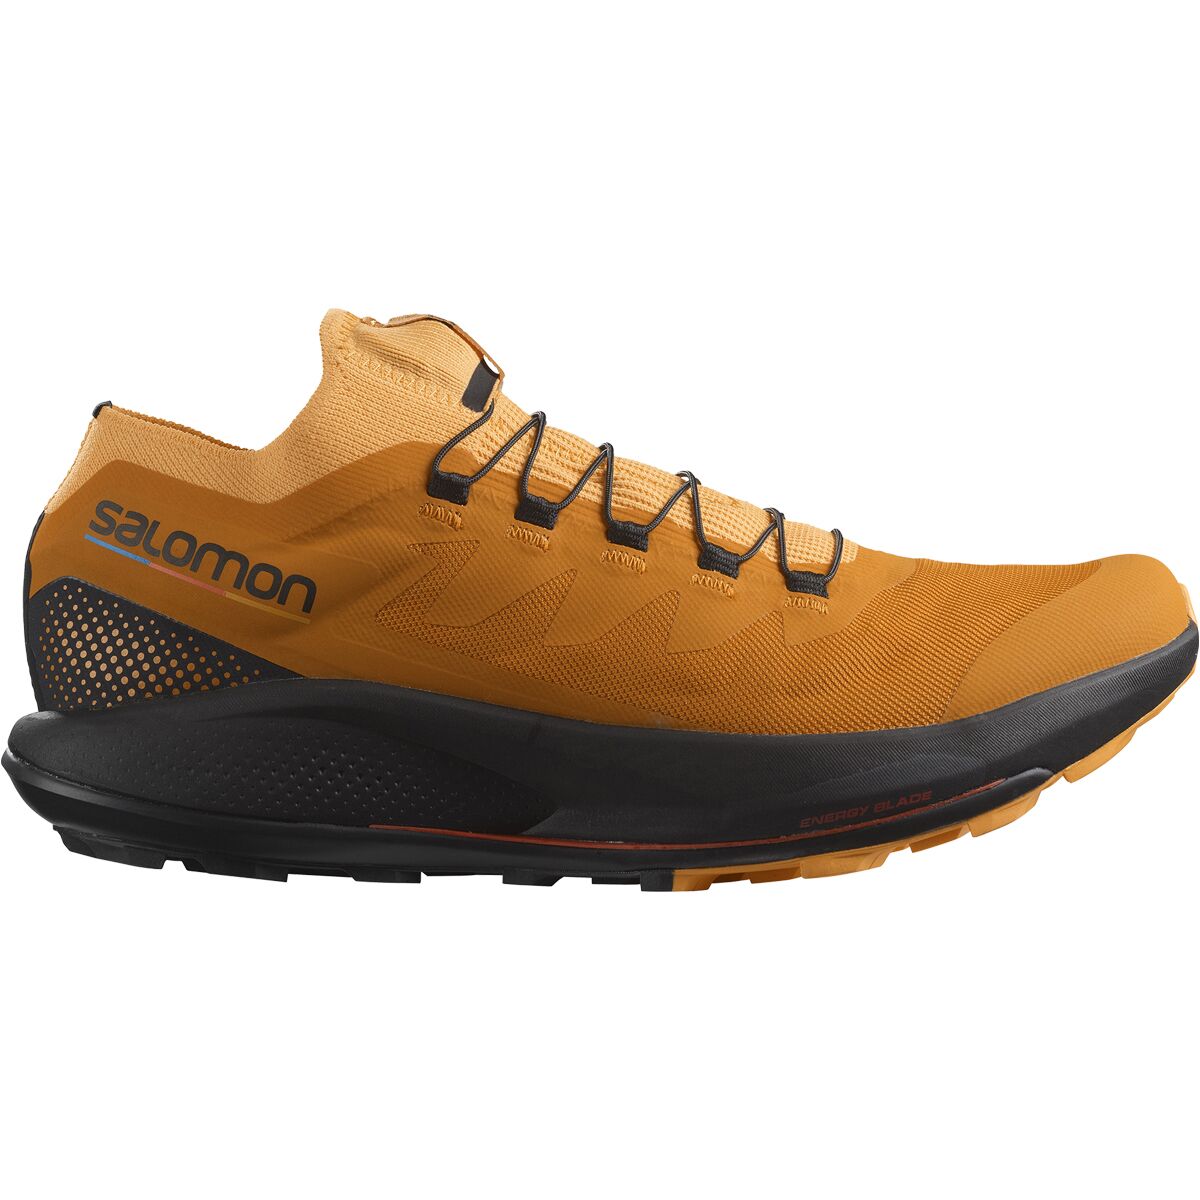 Salomon Pulsar Pro Trail Running Shoe - Men's